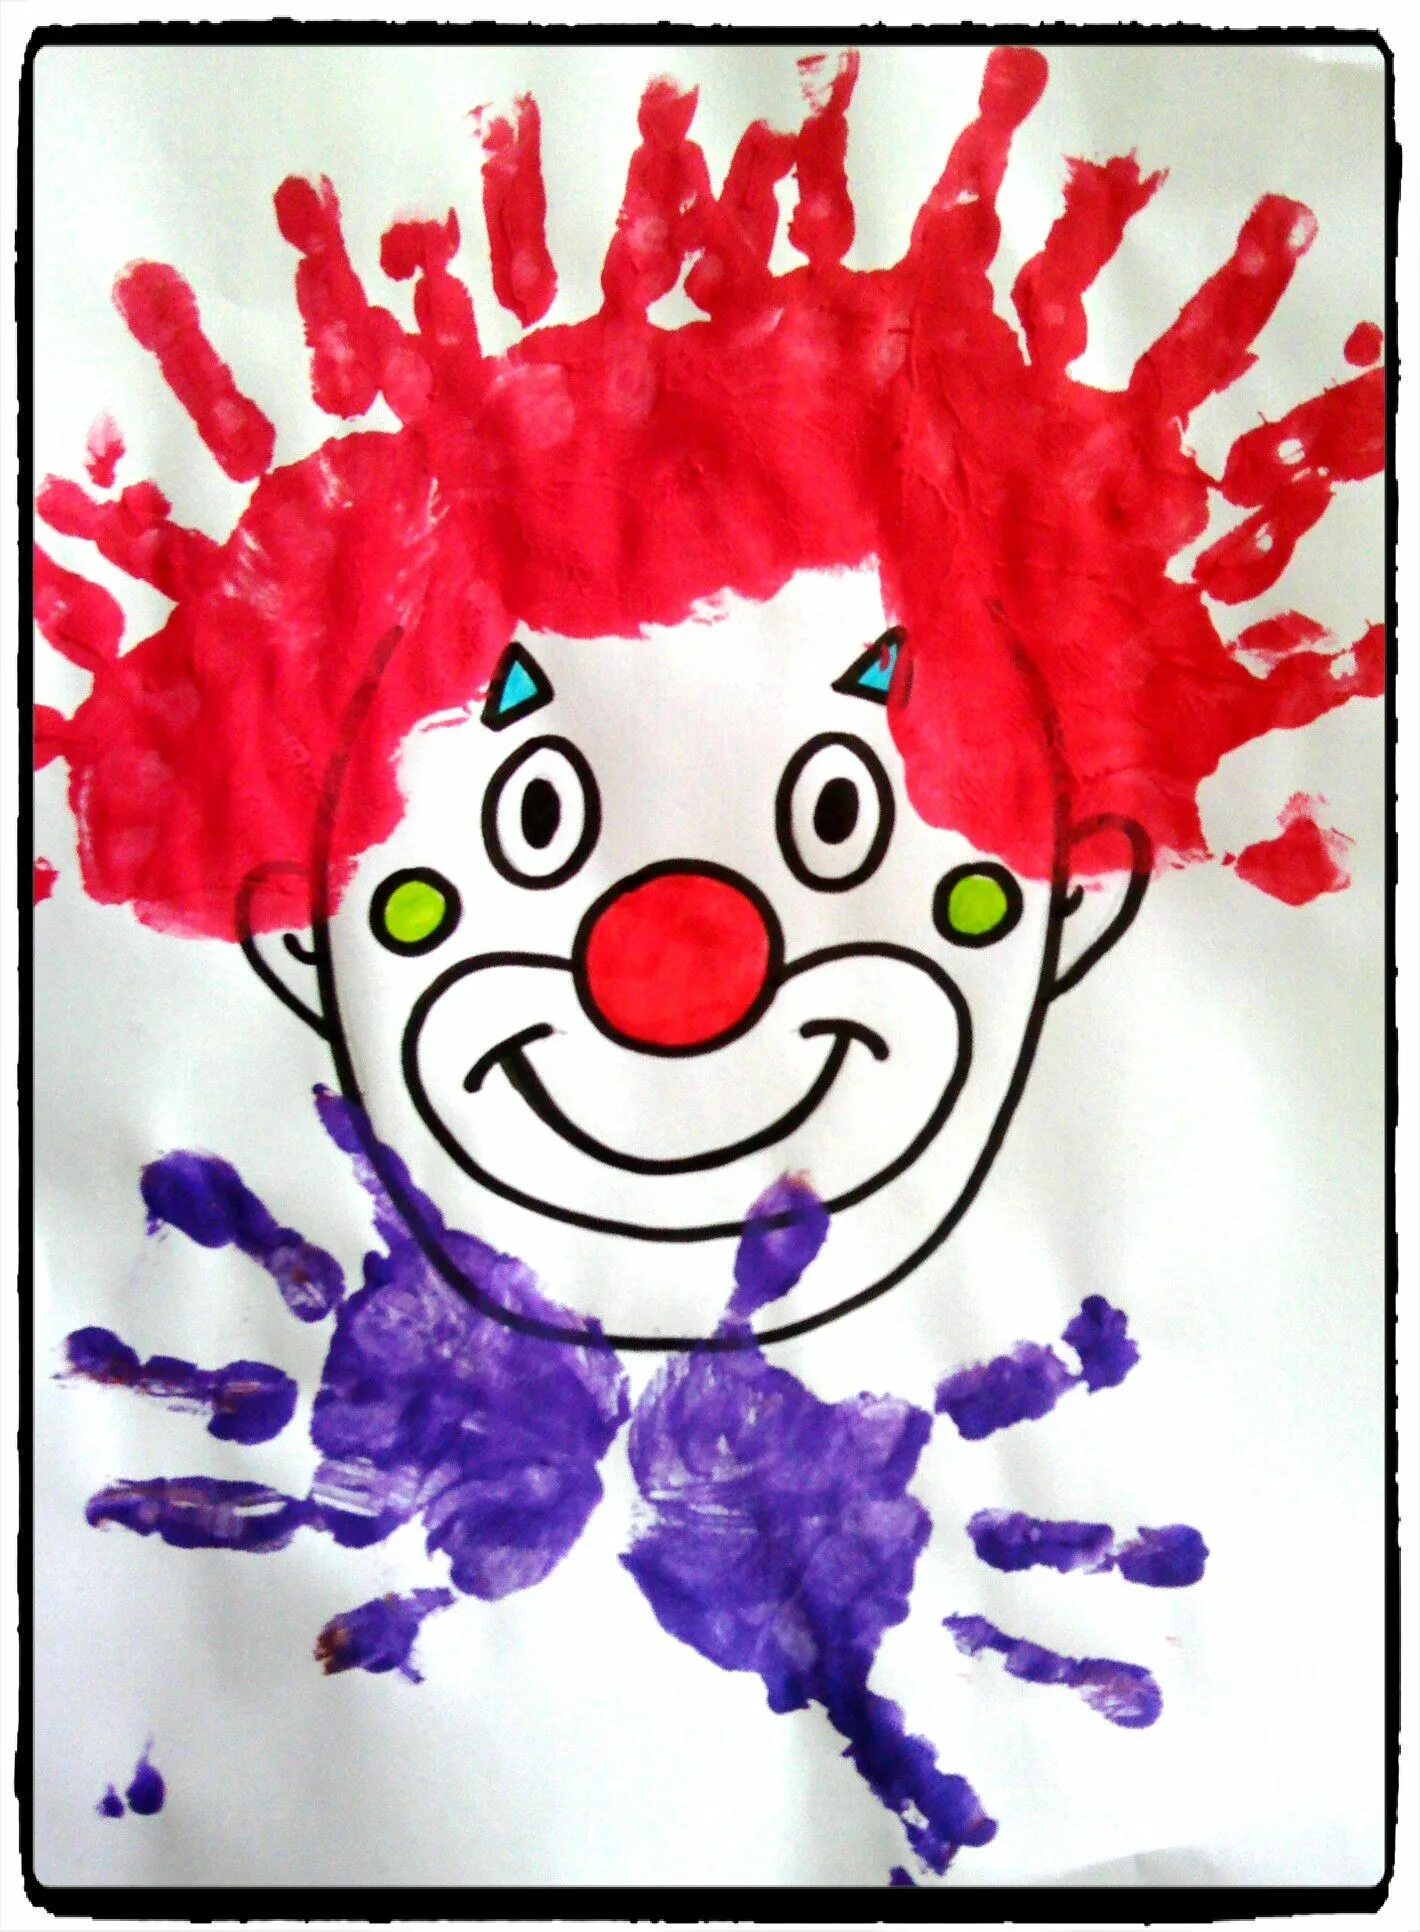 Аппликация клоун средняя. Рисование ладошками. Клоун аппликация для детей. Рисование клоуна ладошкой с детьми. Рисование клоуна ладошкой с детьми средней группы.